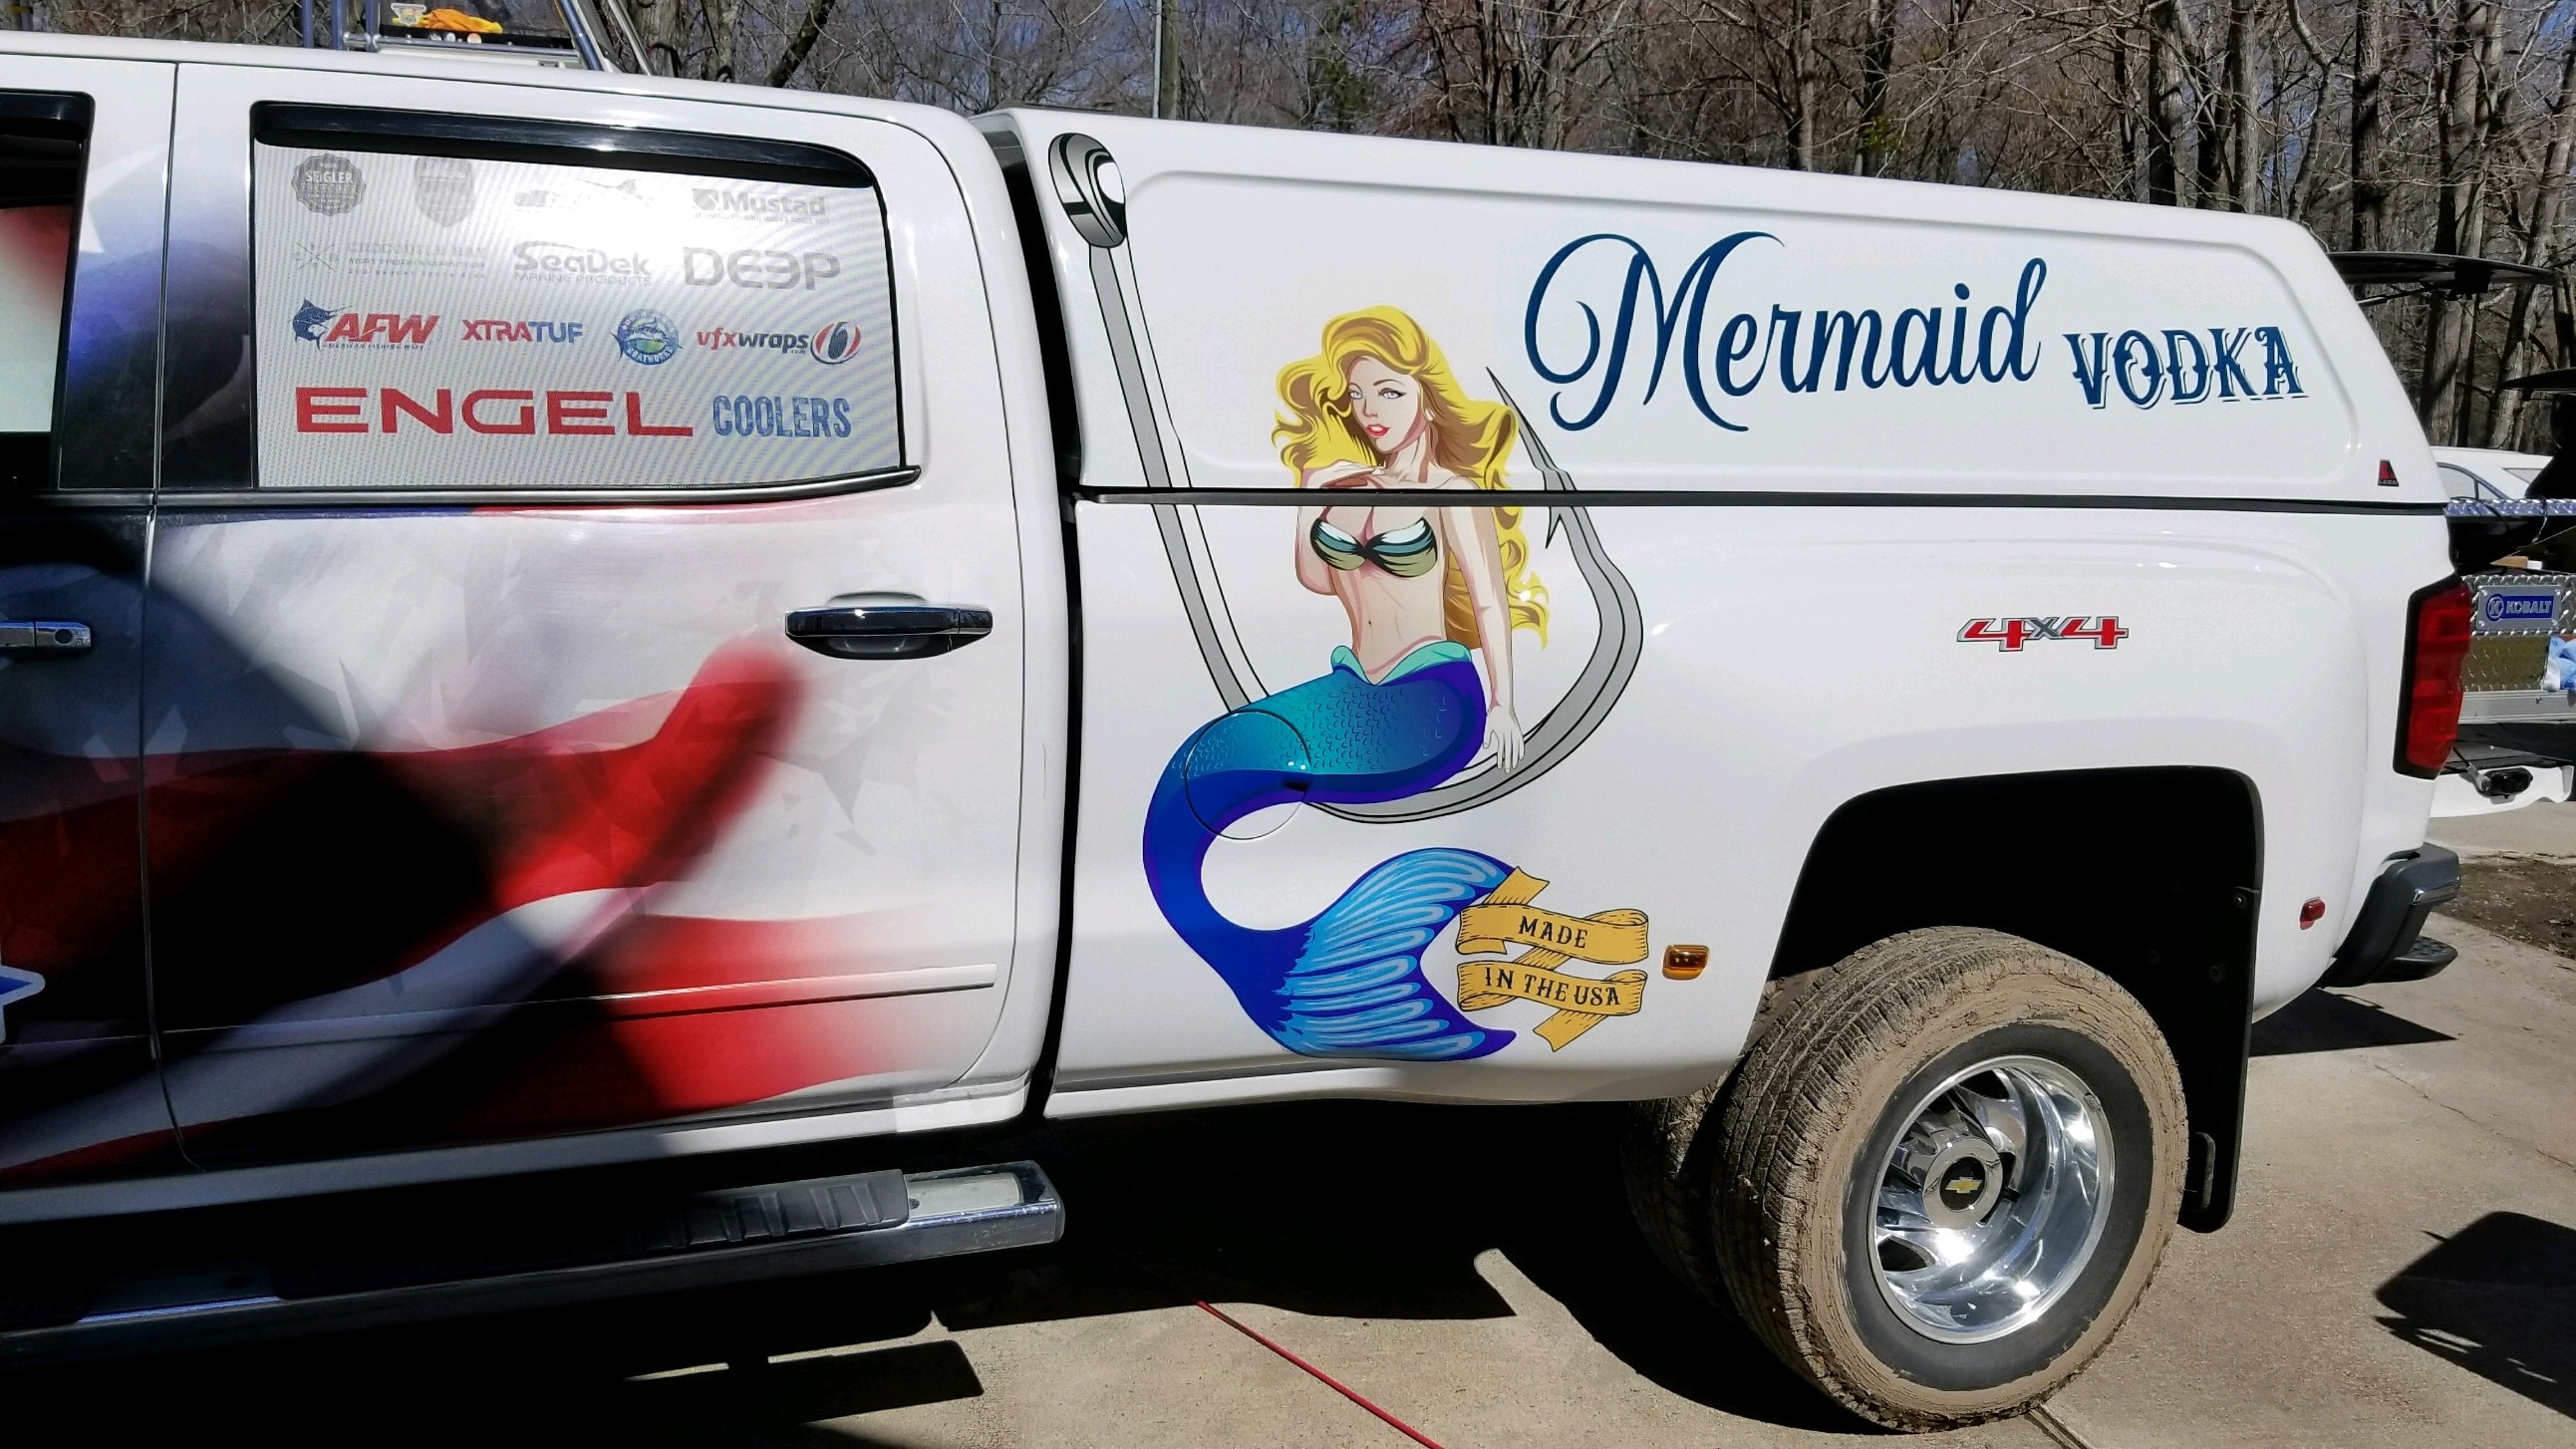 Mermaid Vodka on 4x4 Van